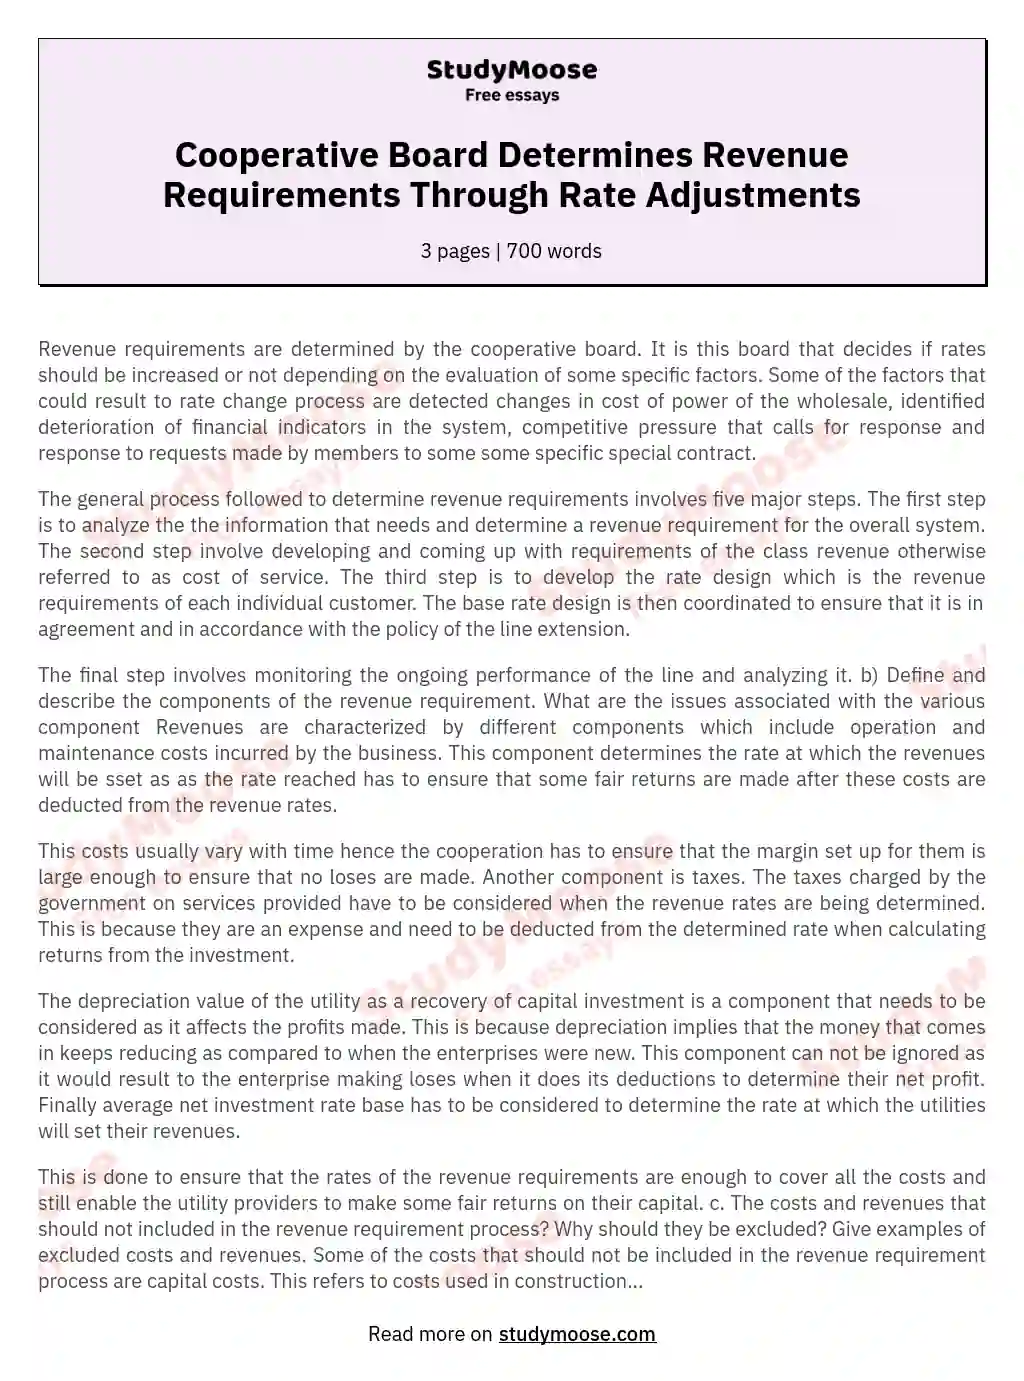 Cooperative Board Determines Revenue Requirements Through Rate Adjustments essay